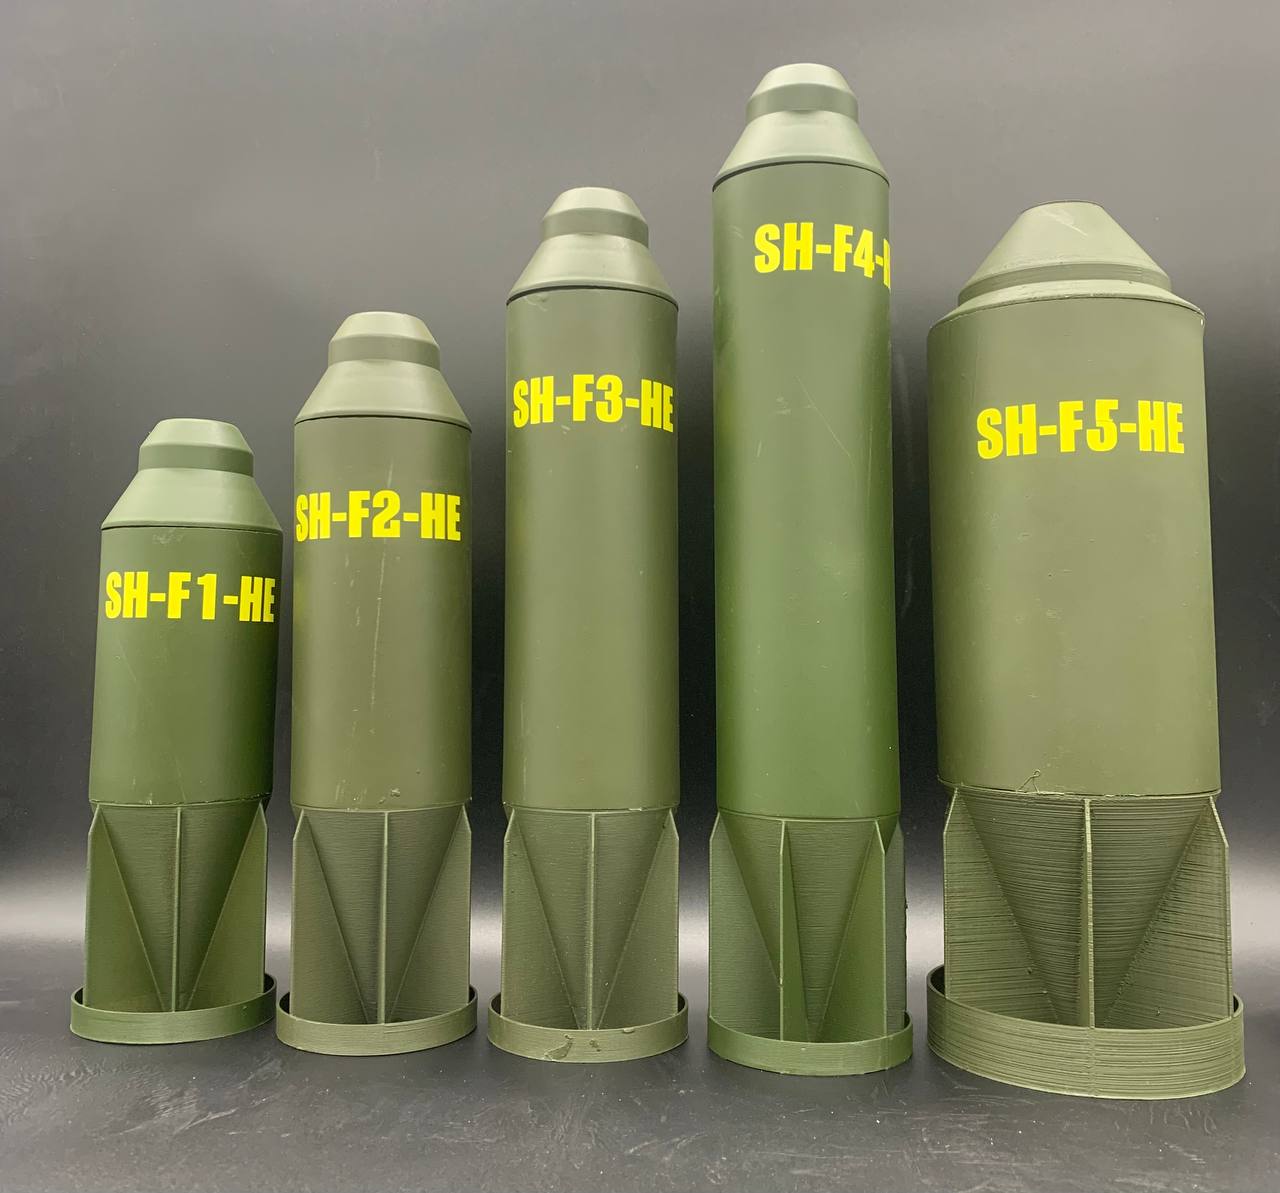 Arsenal of shrapnel shells from Steel Hornets